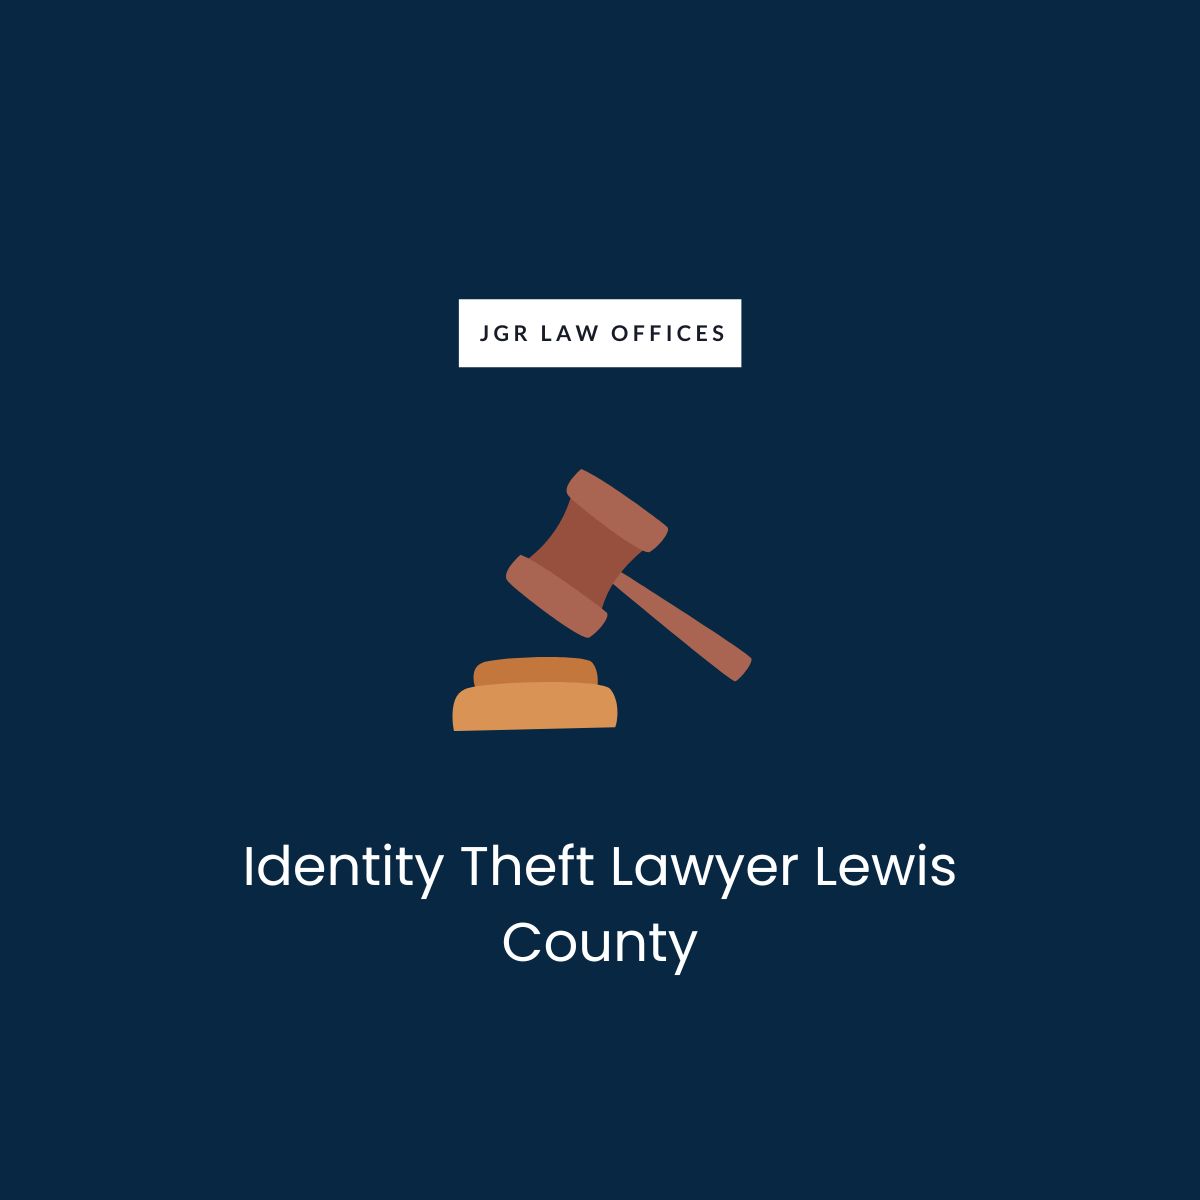 Identity Theft Lawyer Lewis County Identity Theft Identity Theft